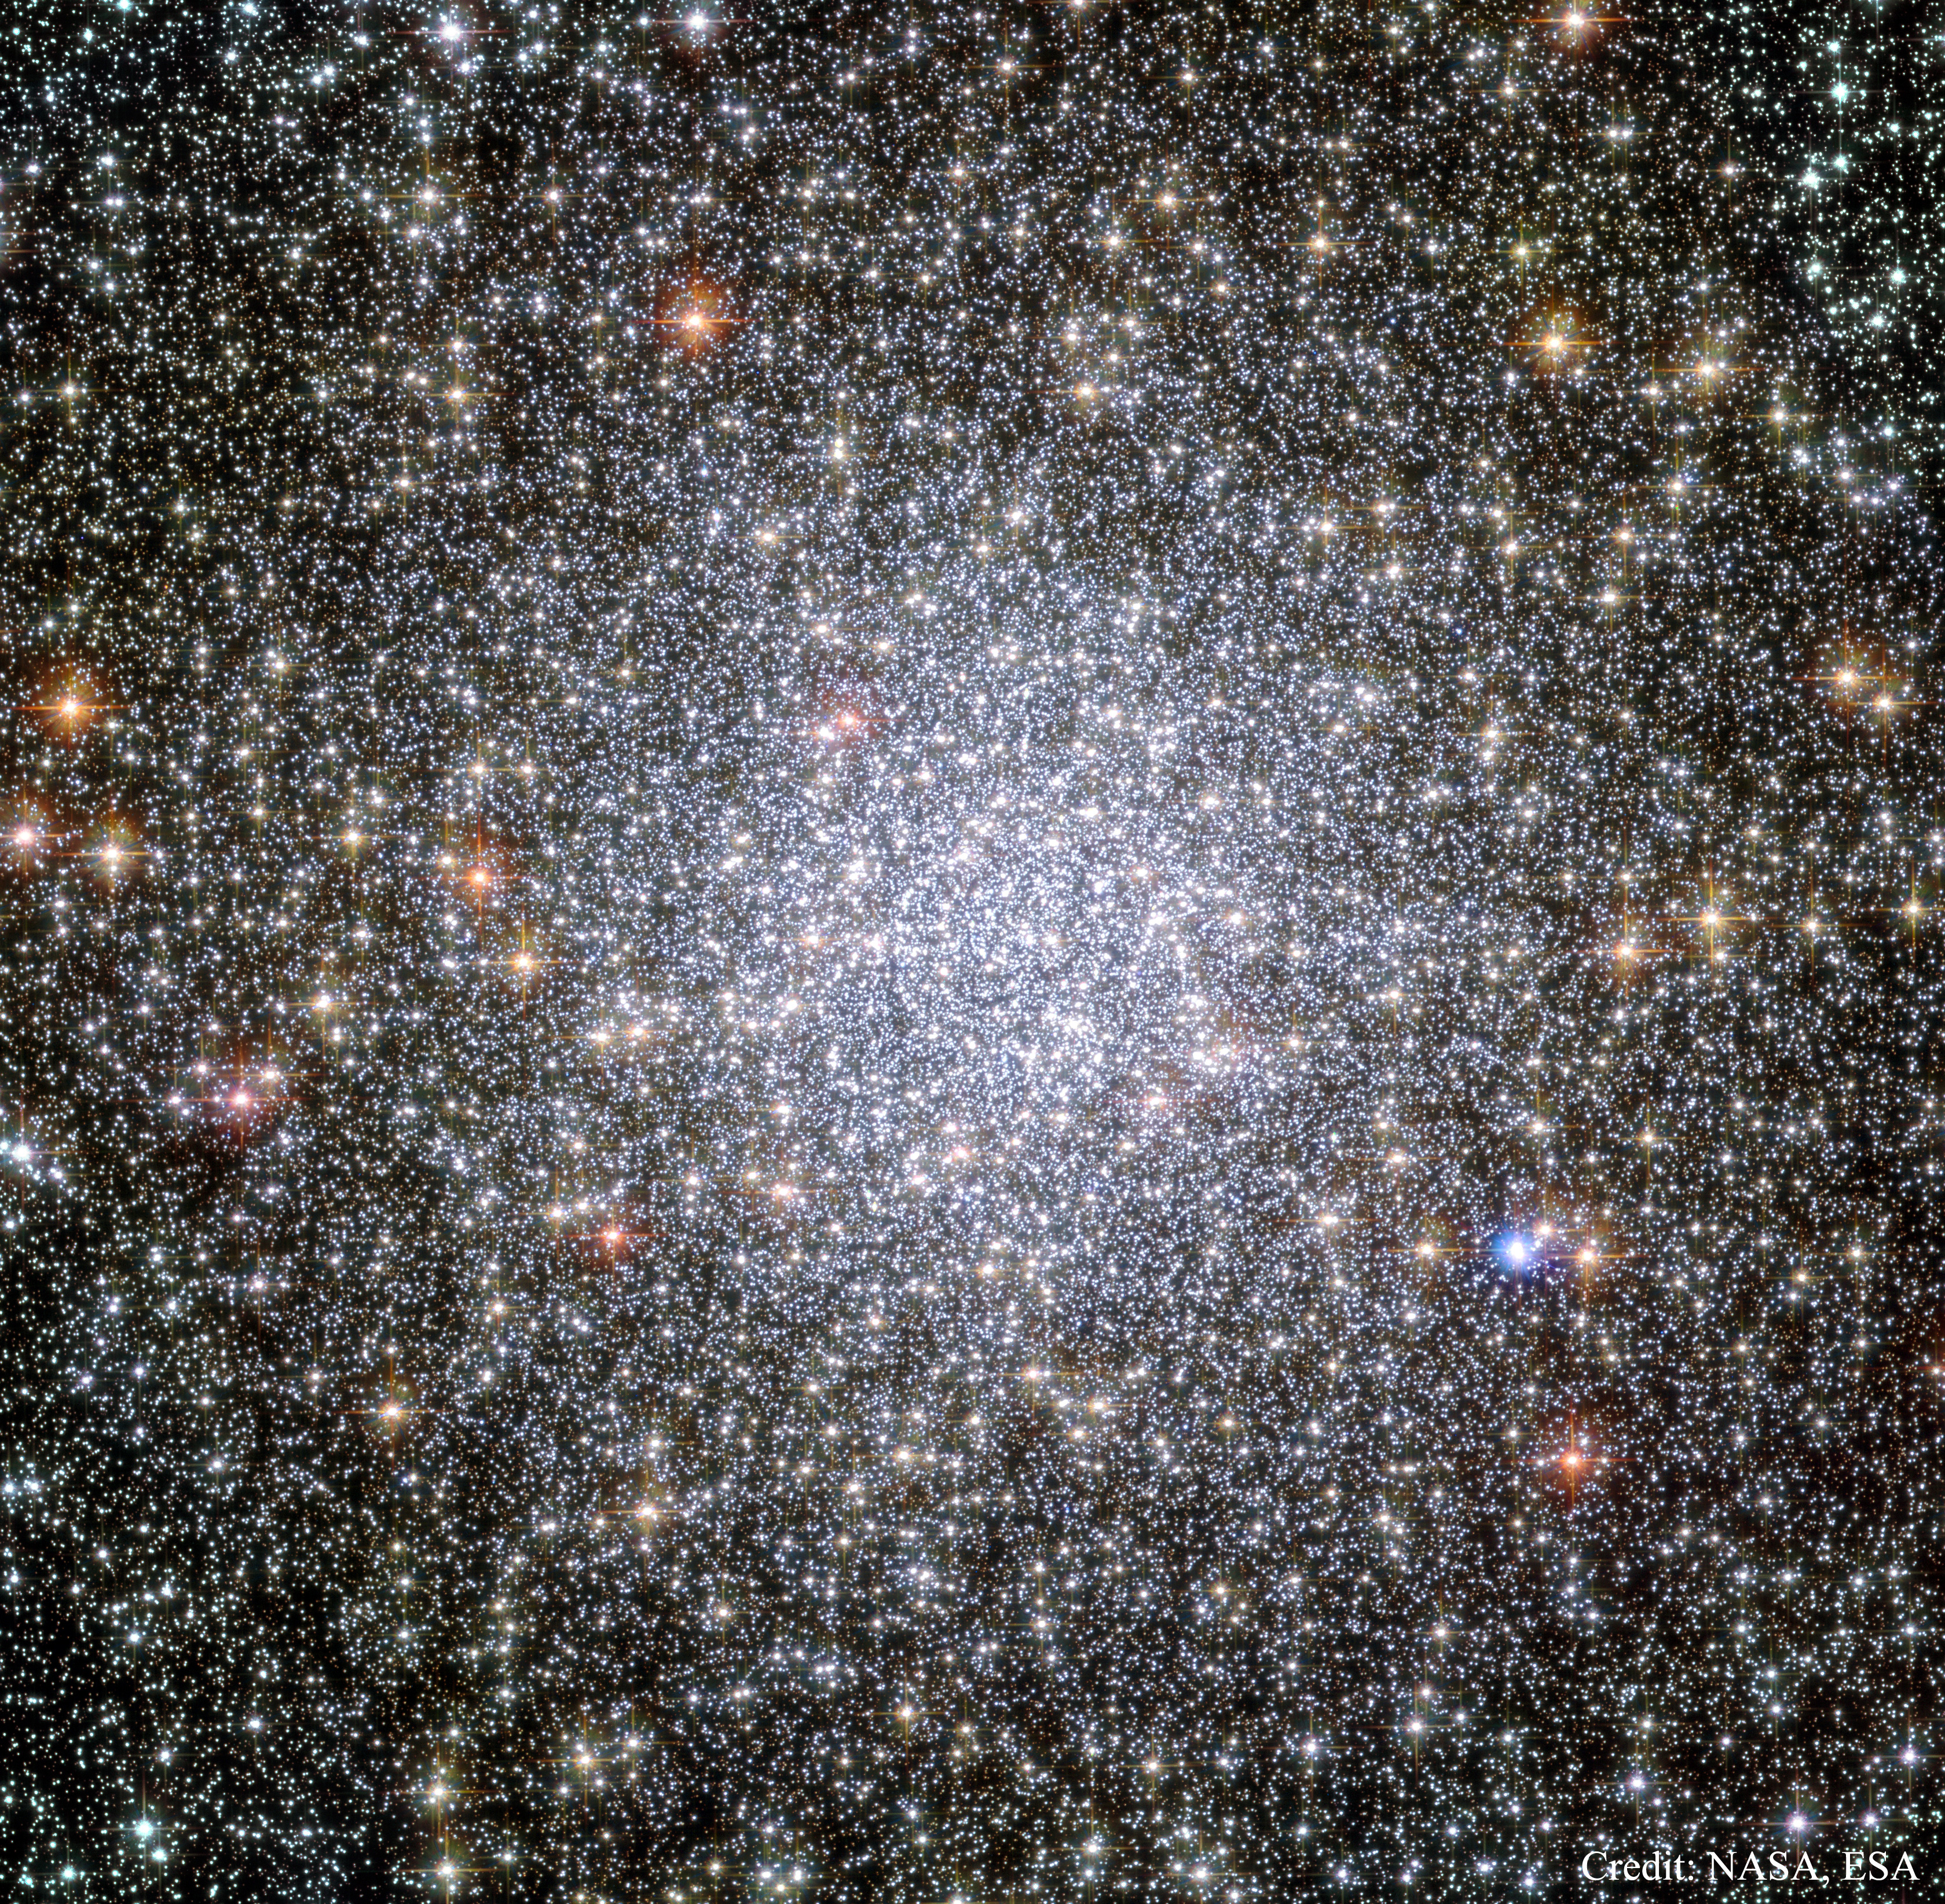 Japod Dayframe Apod 15 May 19 Globular Star Cluster 47 Tuc